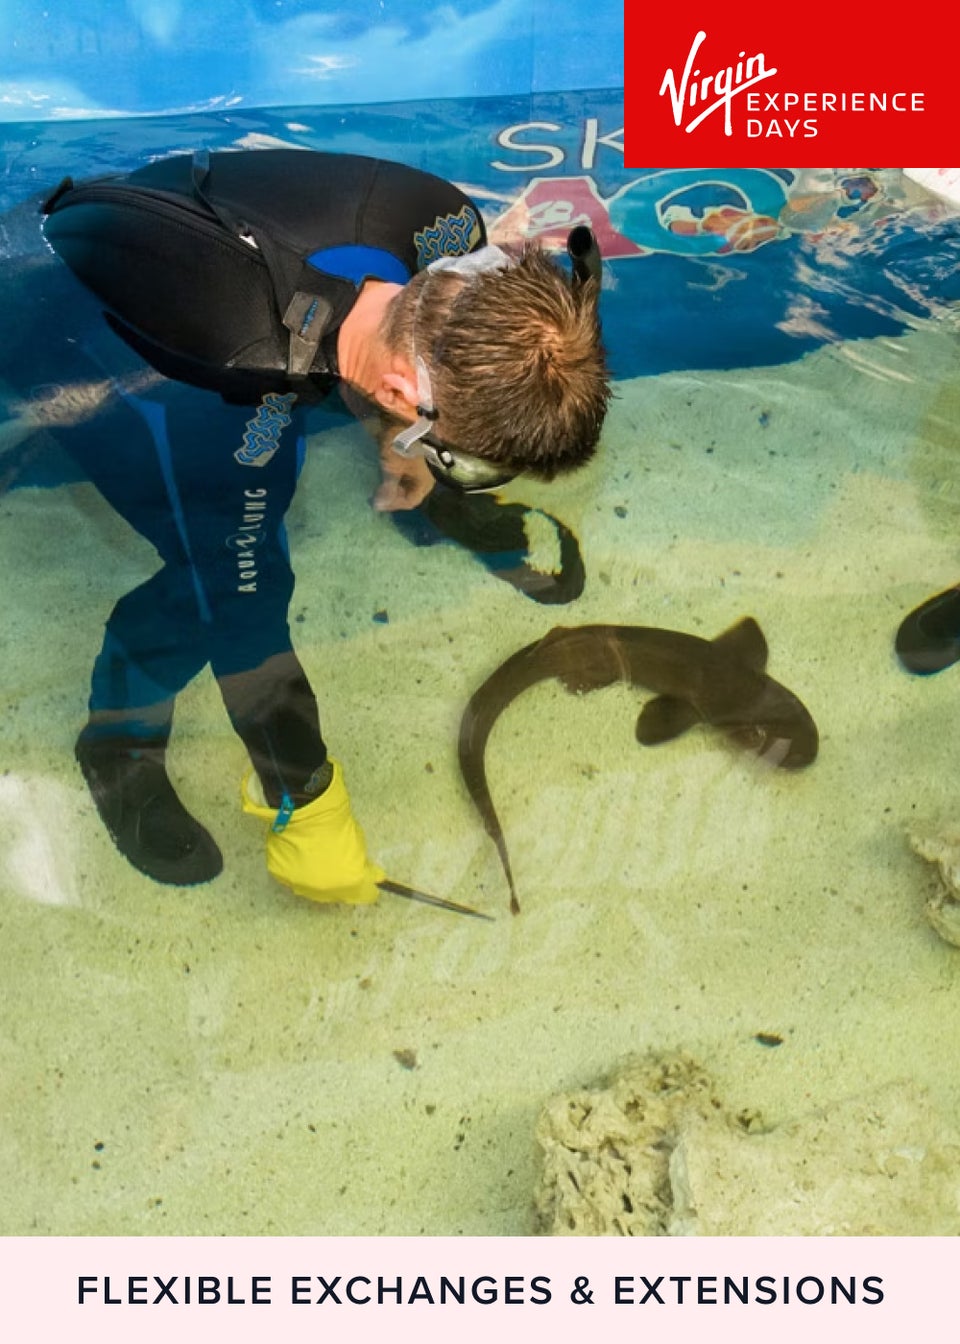 Virgin Experience Days Junior Snorkel with Baby Sharks at Skegness Aquarium